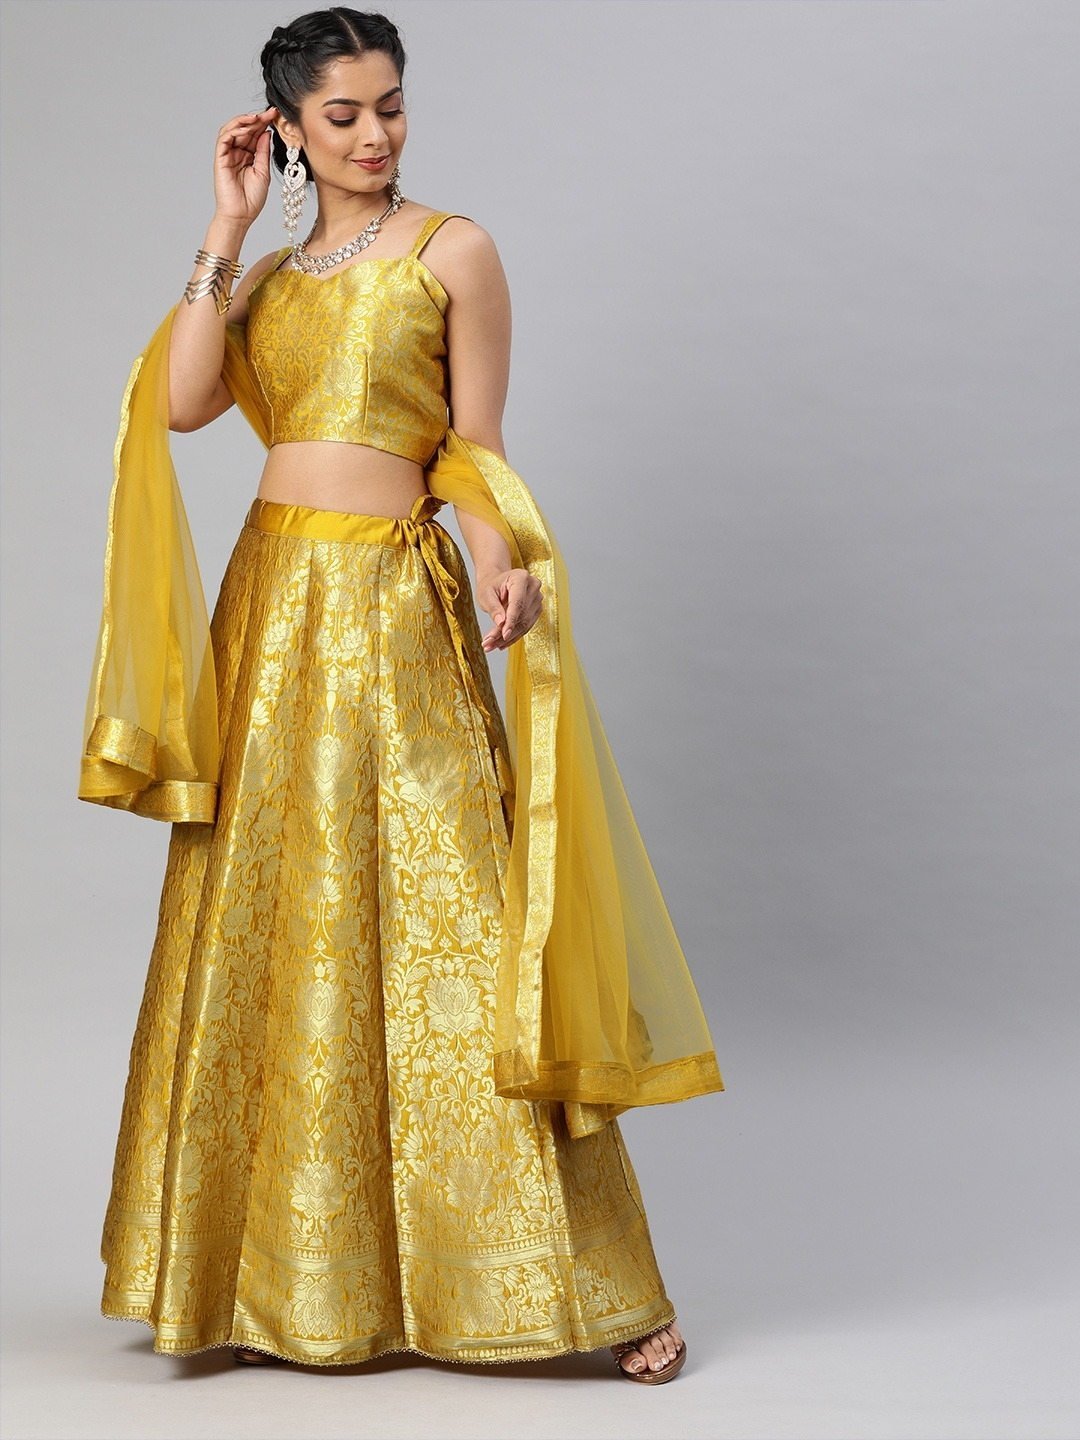 Designerkloth - gold colour half sarees - Free shipping